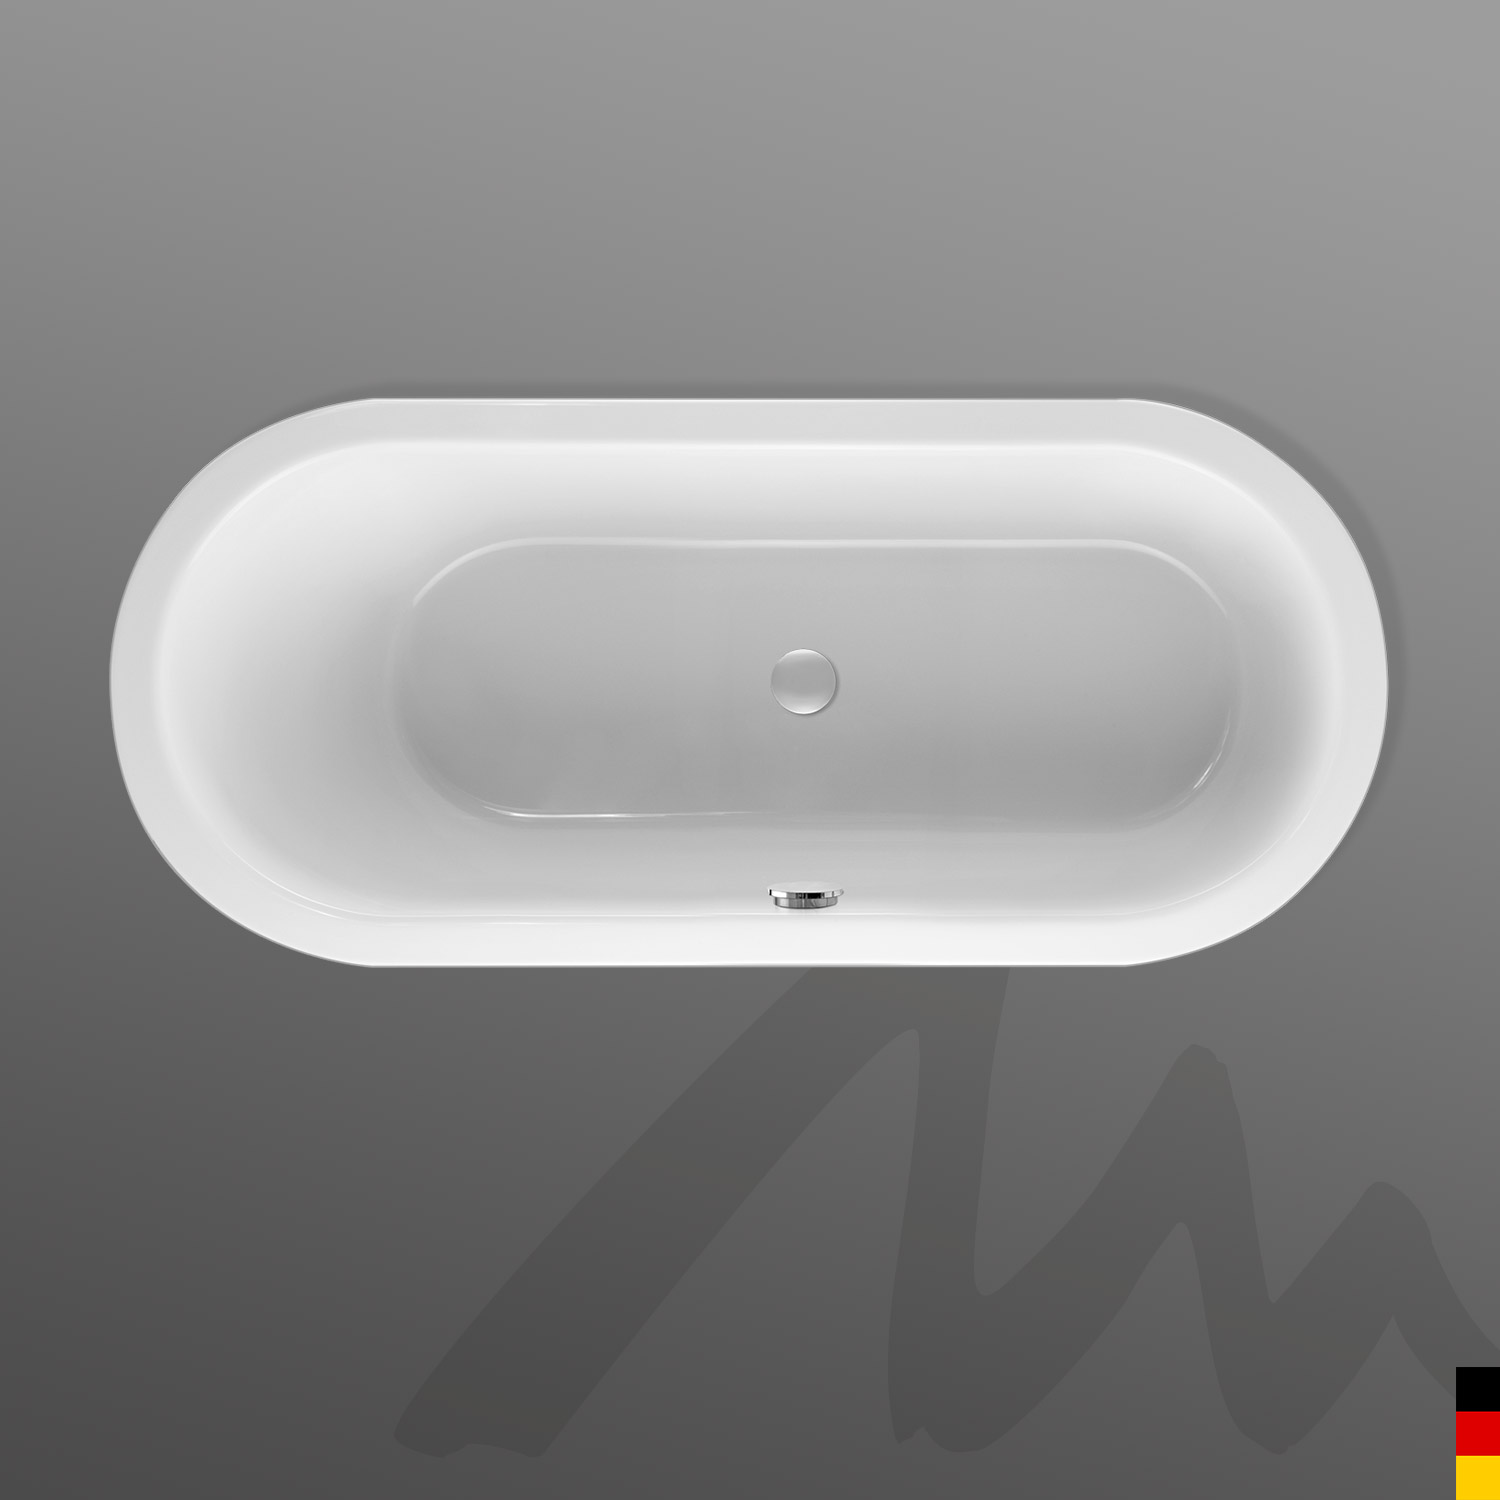 Mauersberger Badewanne Oval Crispa 180/80 uno  180x80x45cm  Farbe:weiß